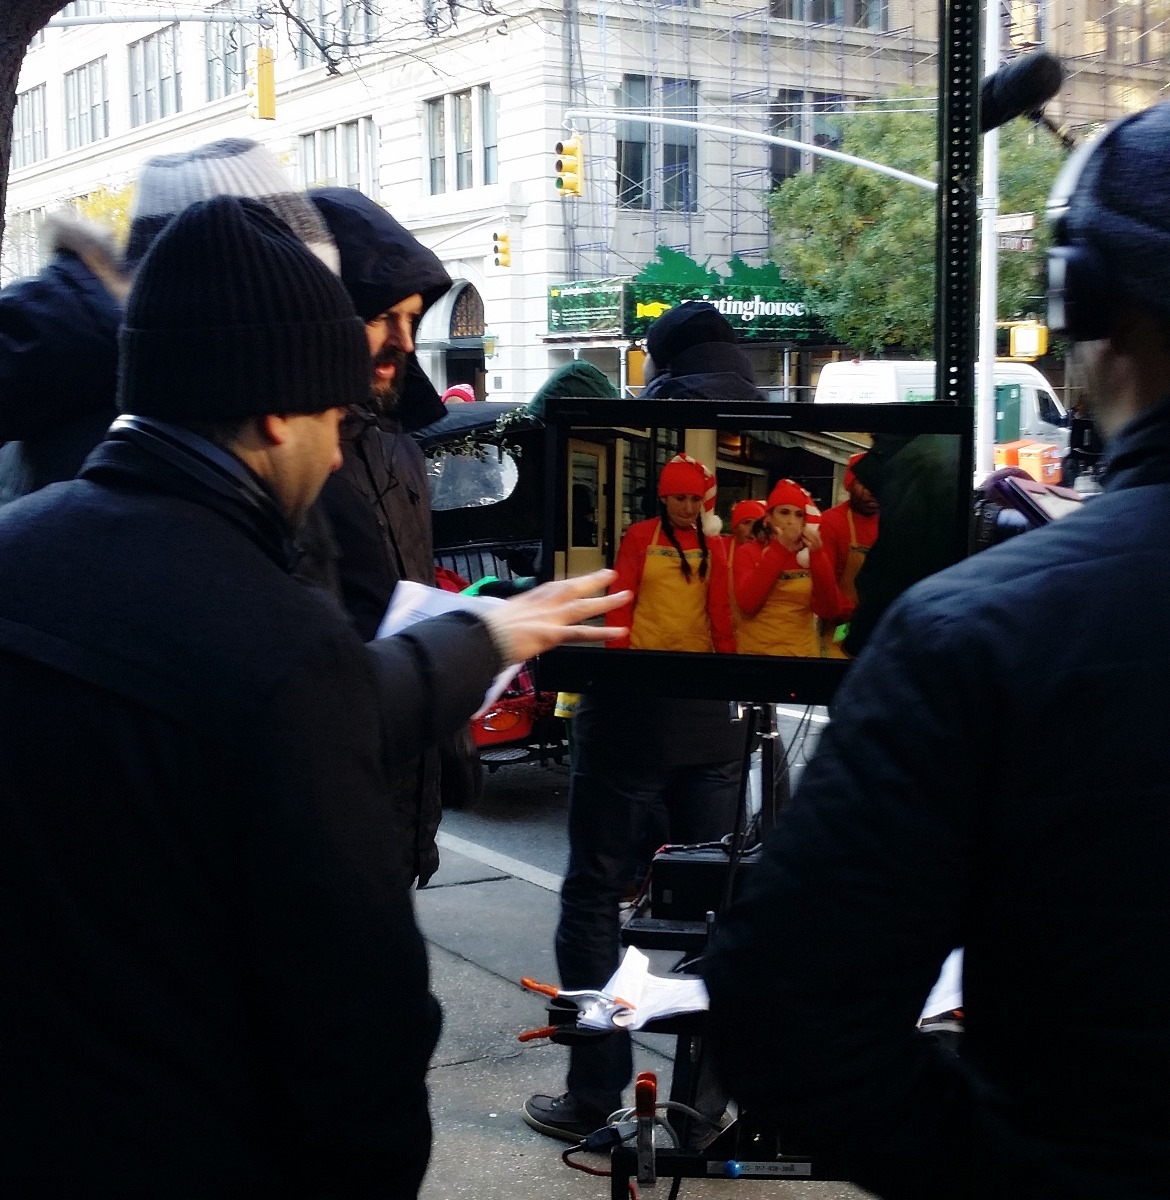 Filming Christmas ads - New York New York, travel blog by BeckyBecky Blogs